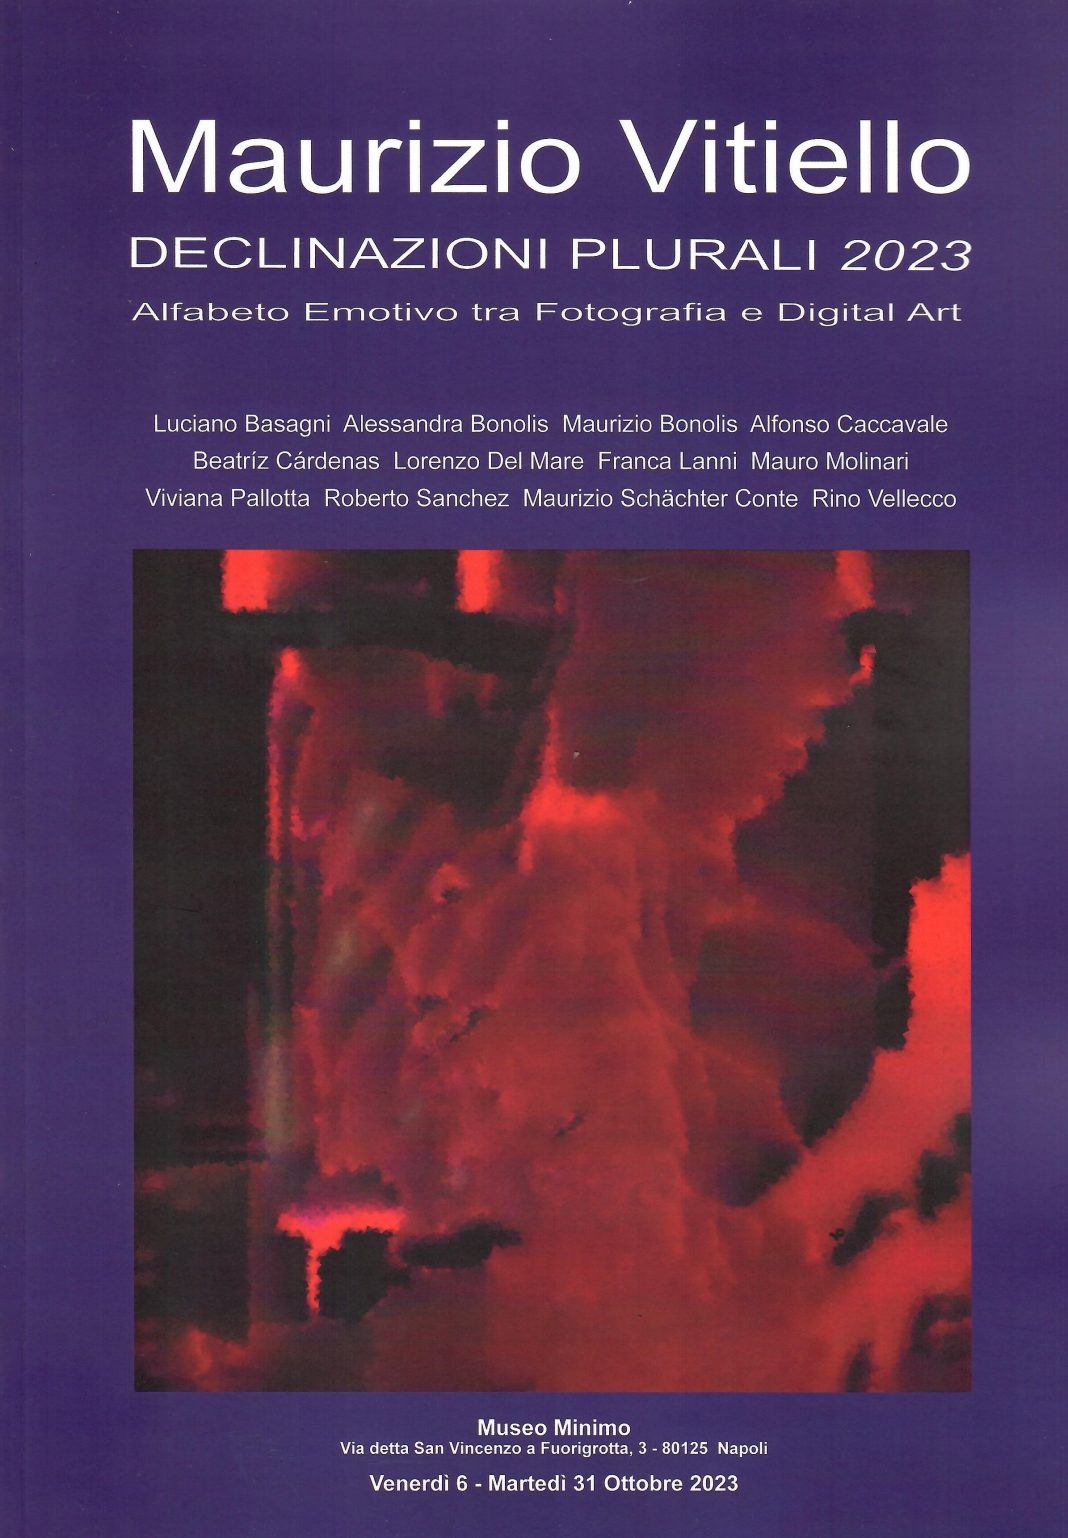 DECLINAZIONI PLURALI 2023https://www.exibart.com/repository/media/formidable/11/img/f61/2-Cover-Declinazioni-Plurali-2023-1068x1538.jpg